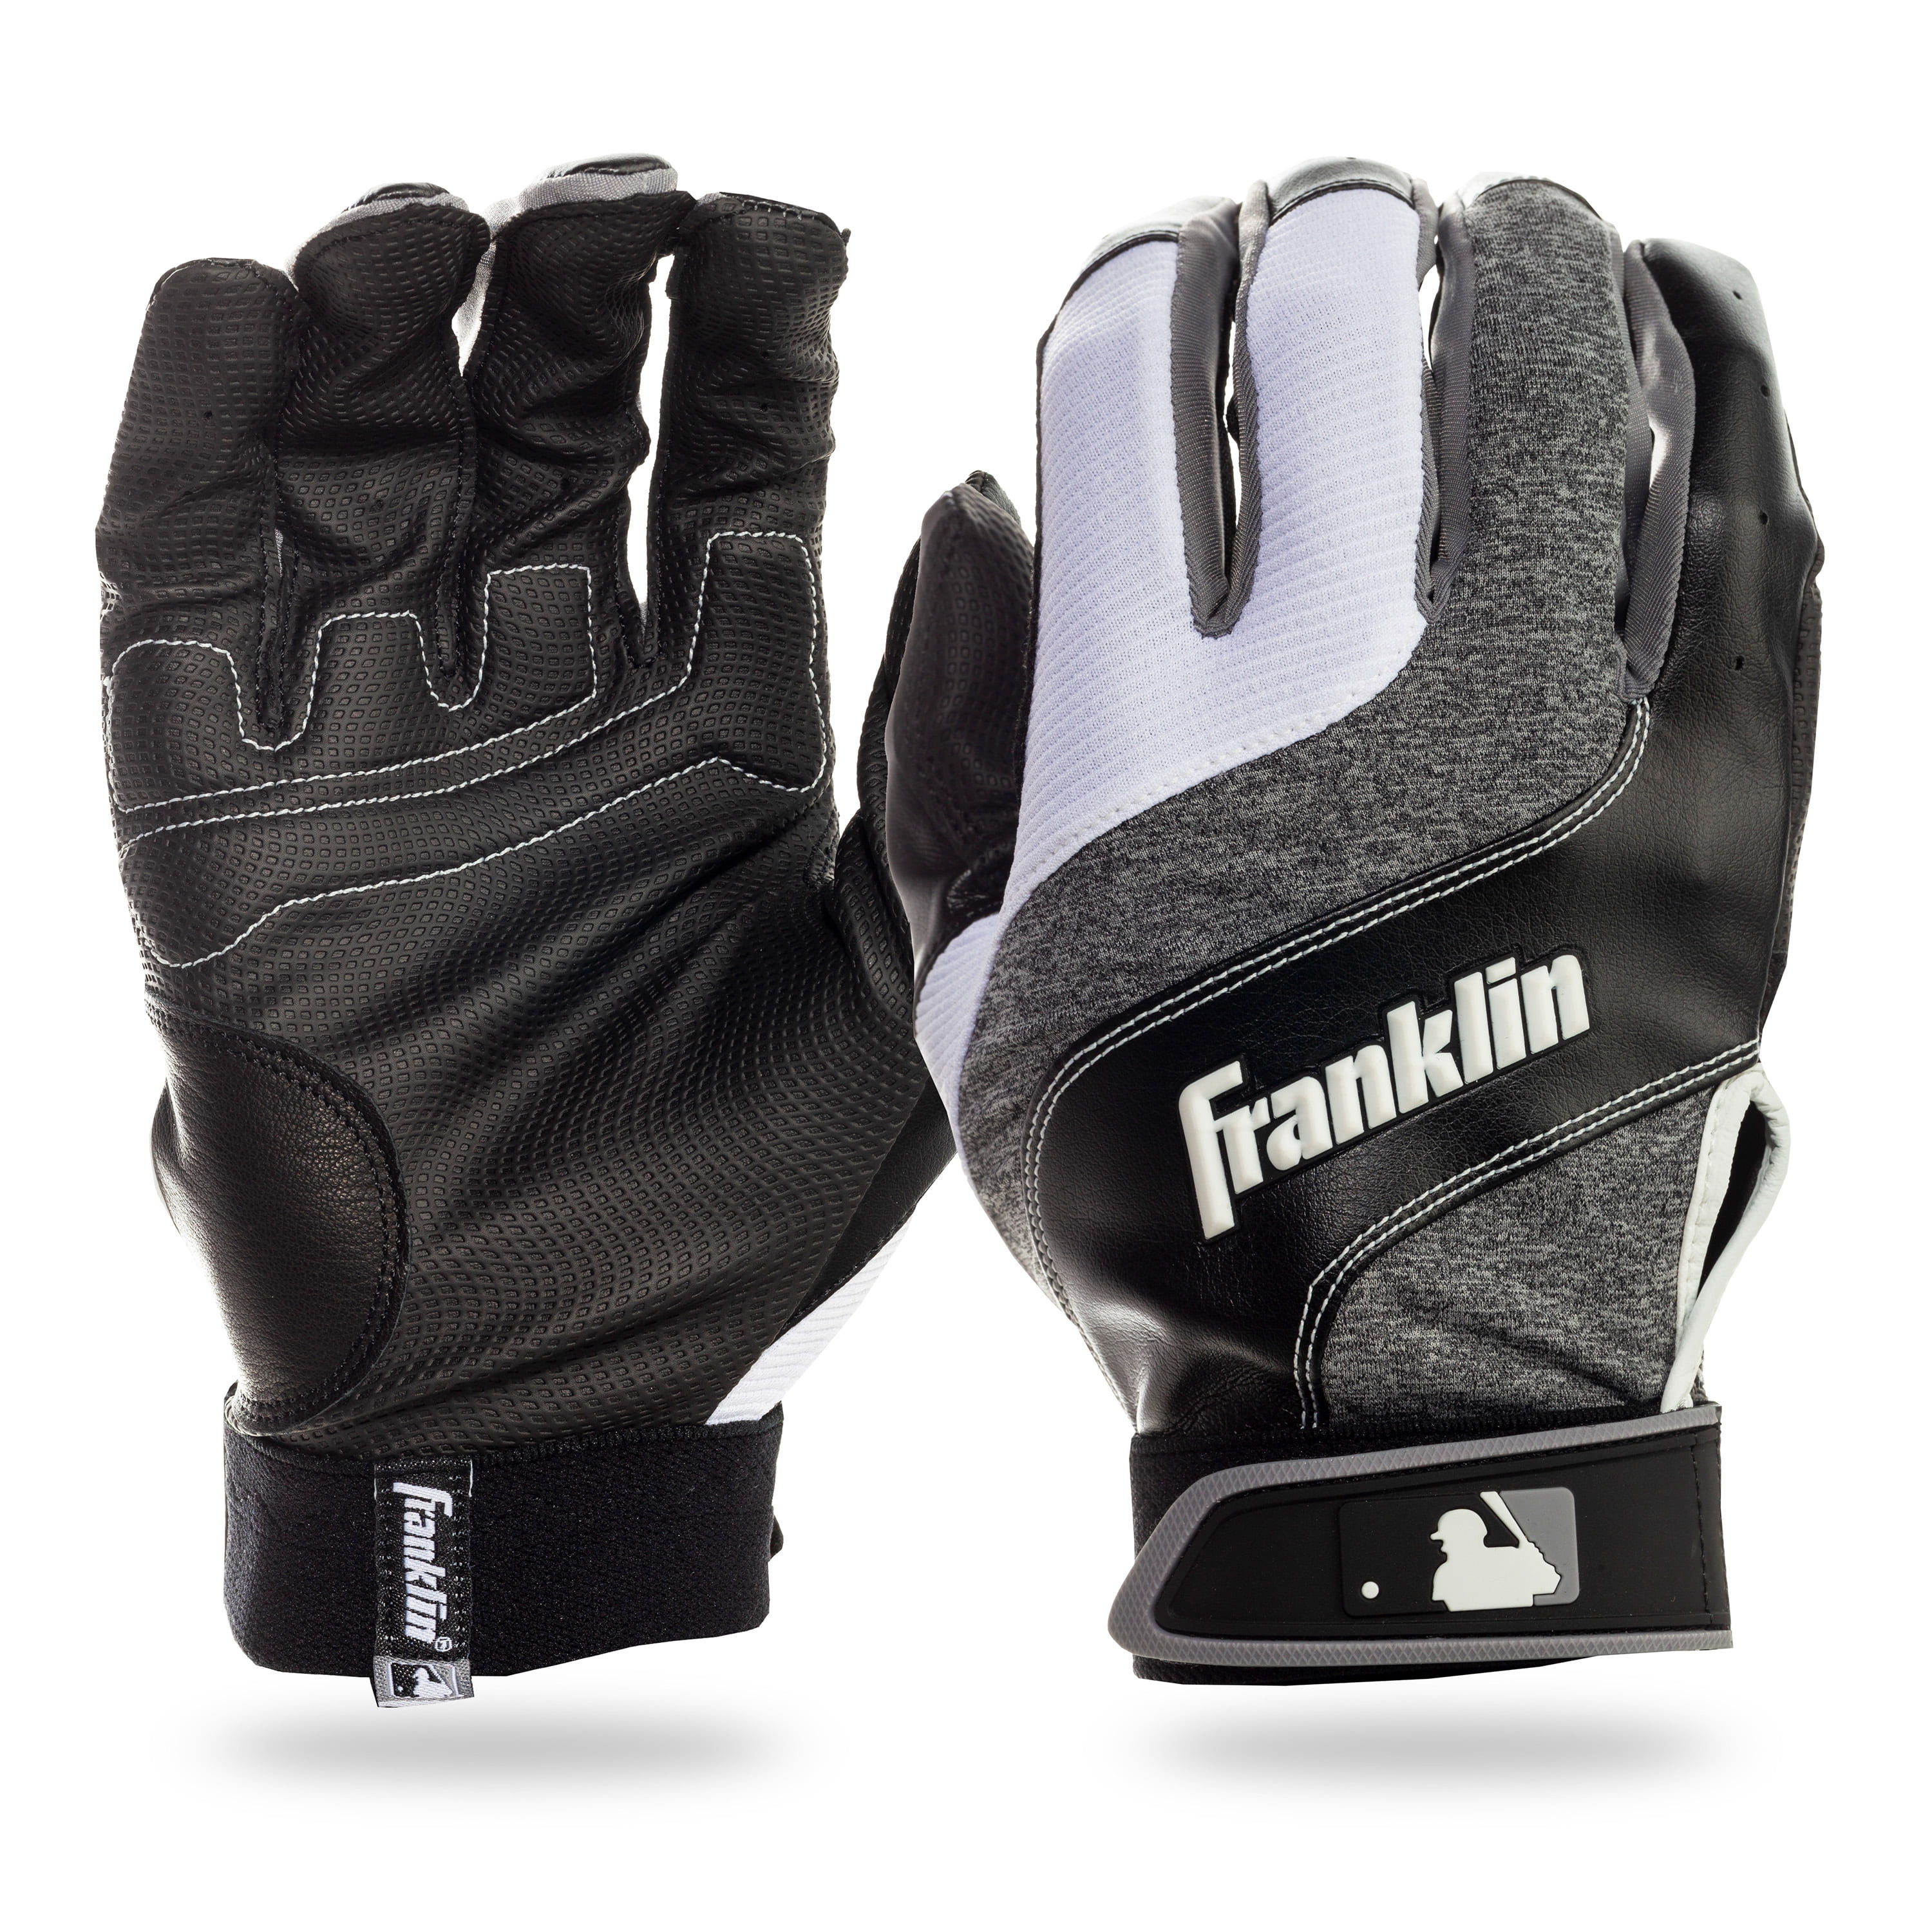 New Details about   Franklin Shok-Wave Batting Gloves Black White Gray Youth Large 